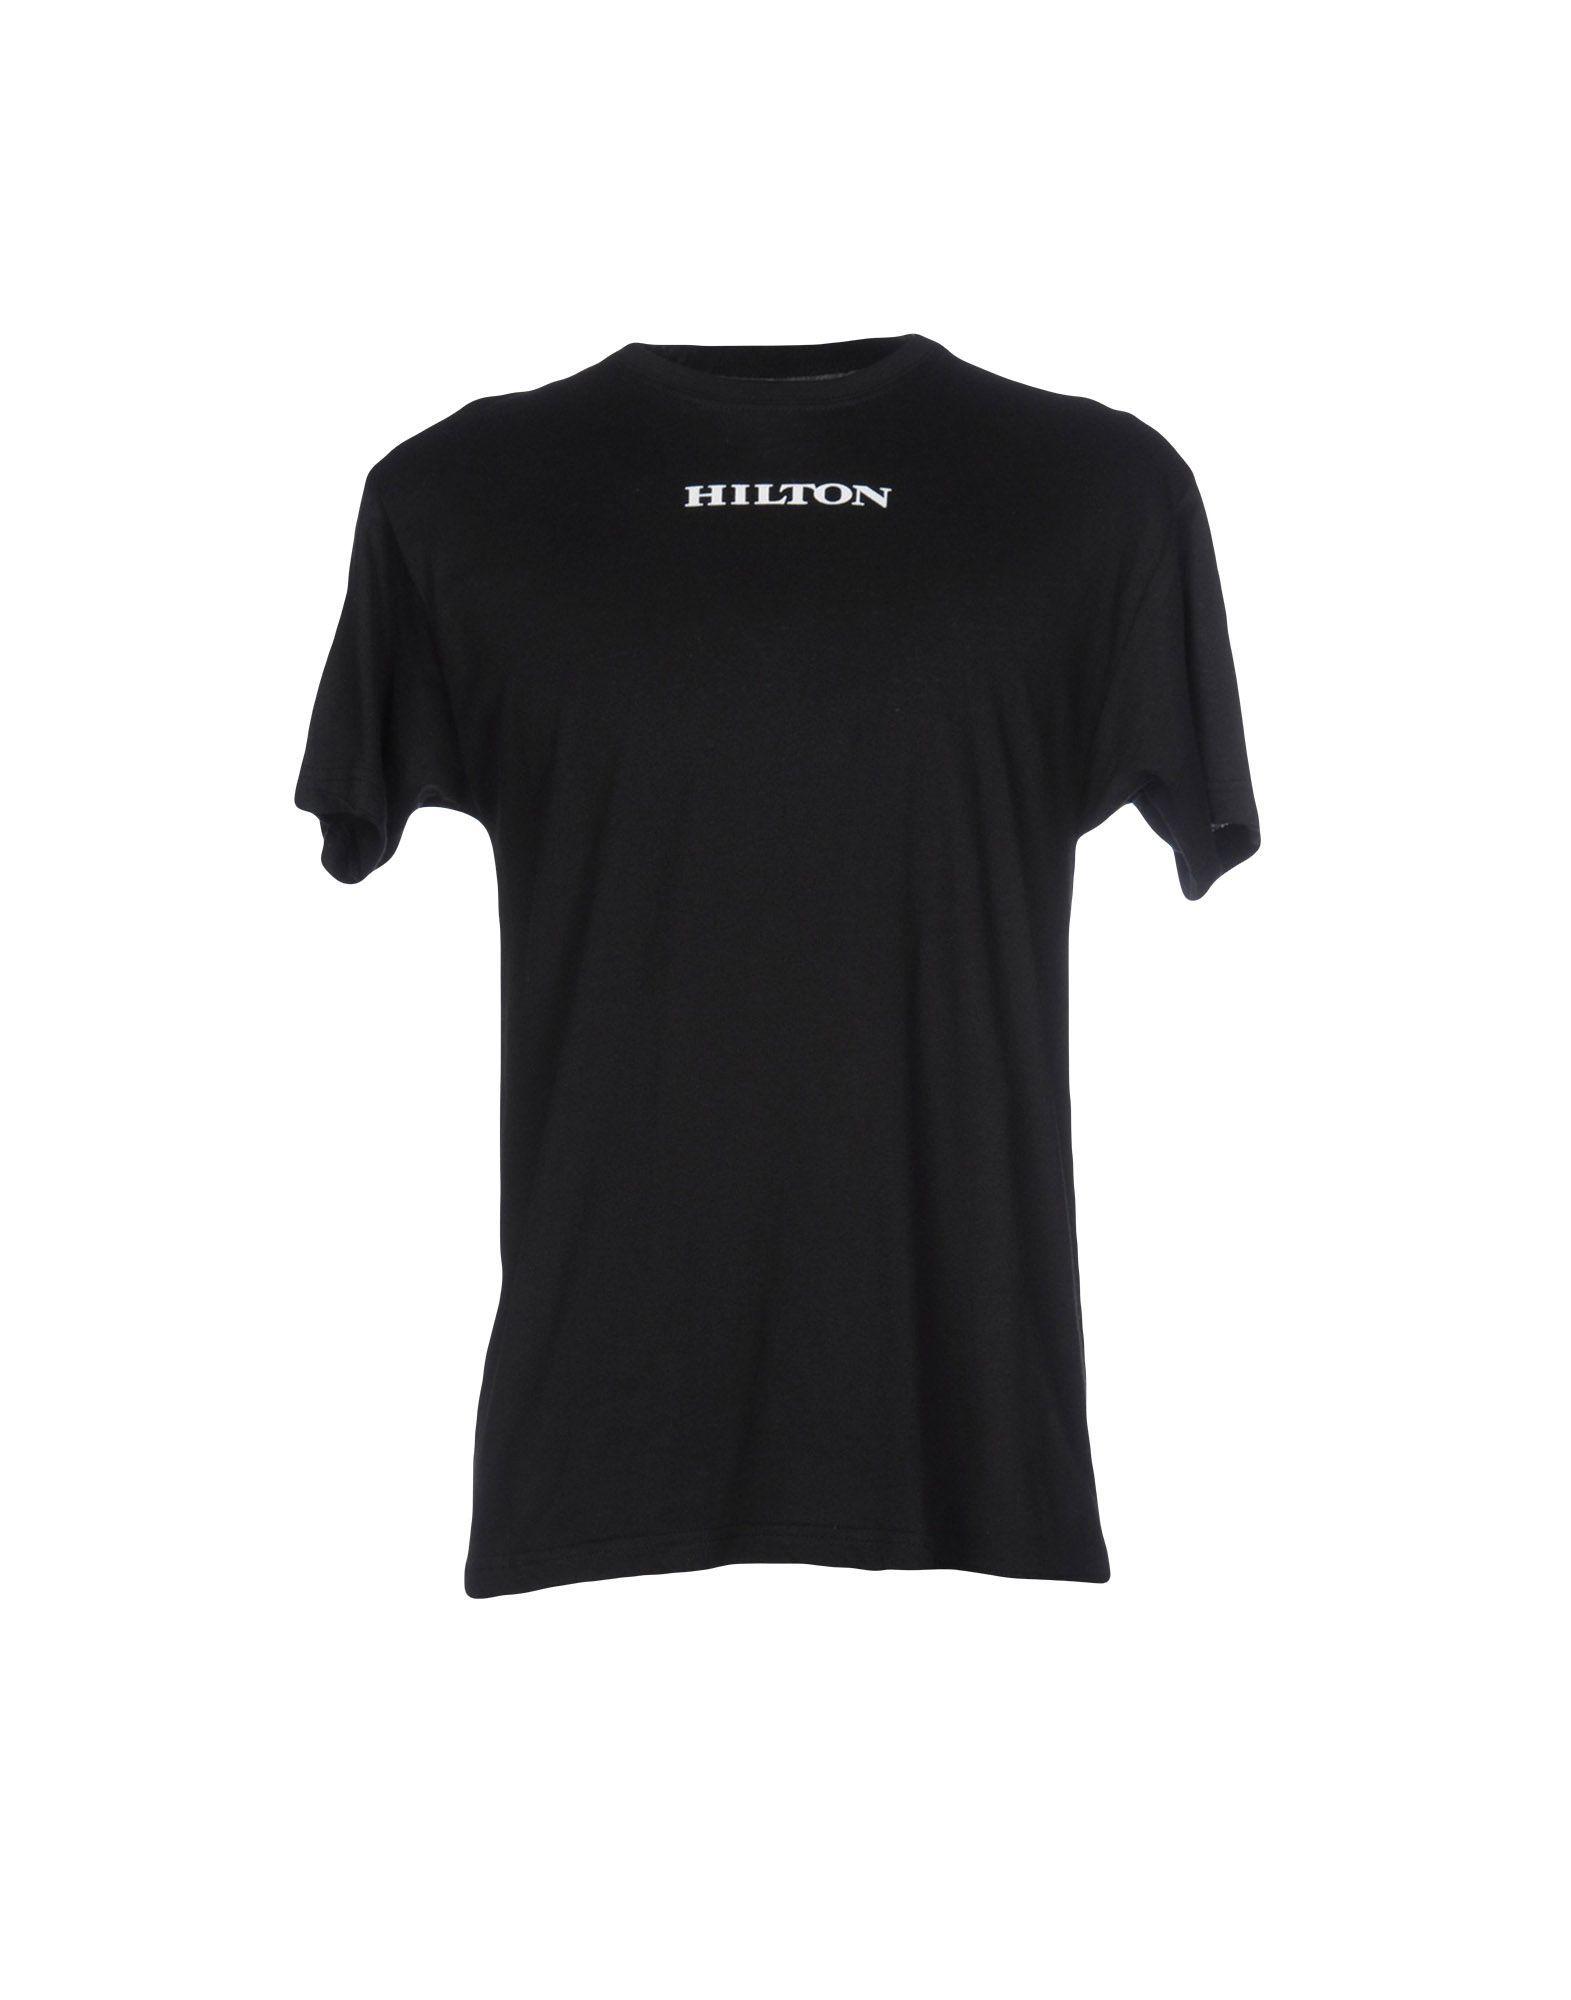 Hilton Clothing Logo - Hilton T-Shirt - Men Hilton T-Shirts online on YOOX United States ...